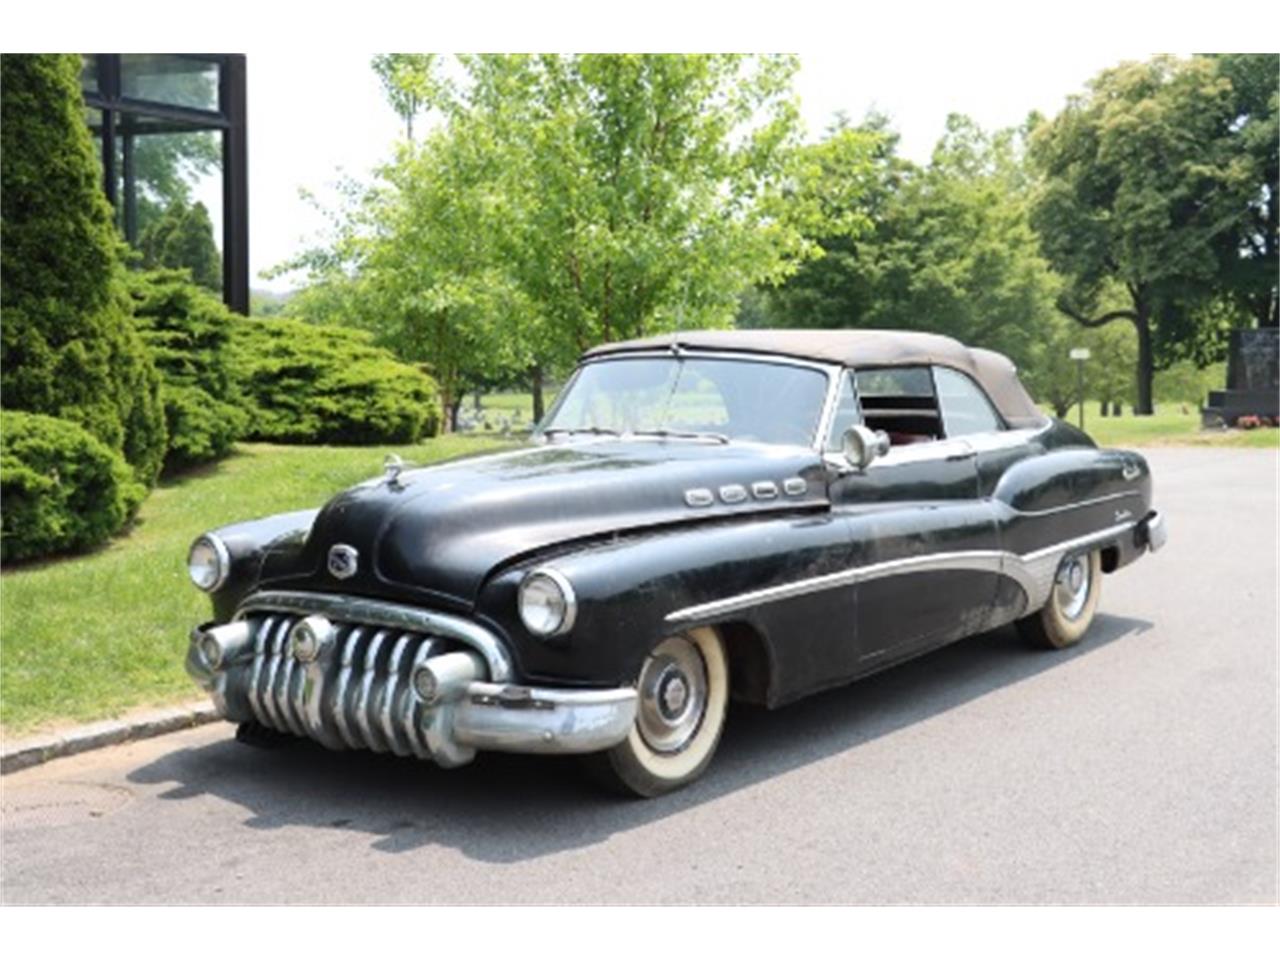 For Sale: 1950 Buick Roadmaster in Astoria, New York for sale in Astoria, NY